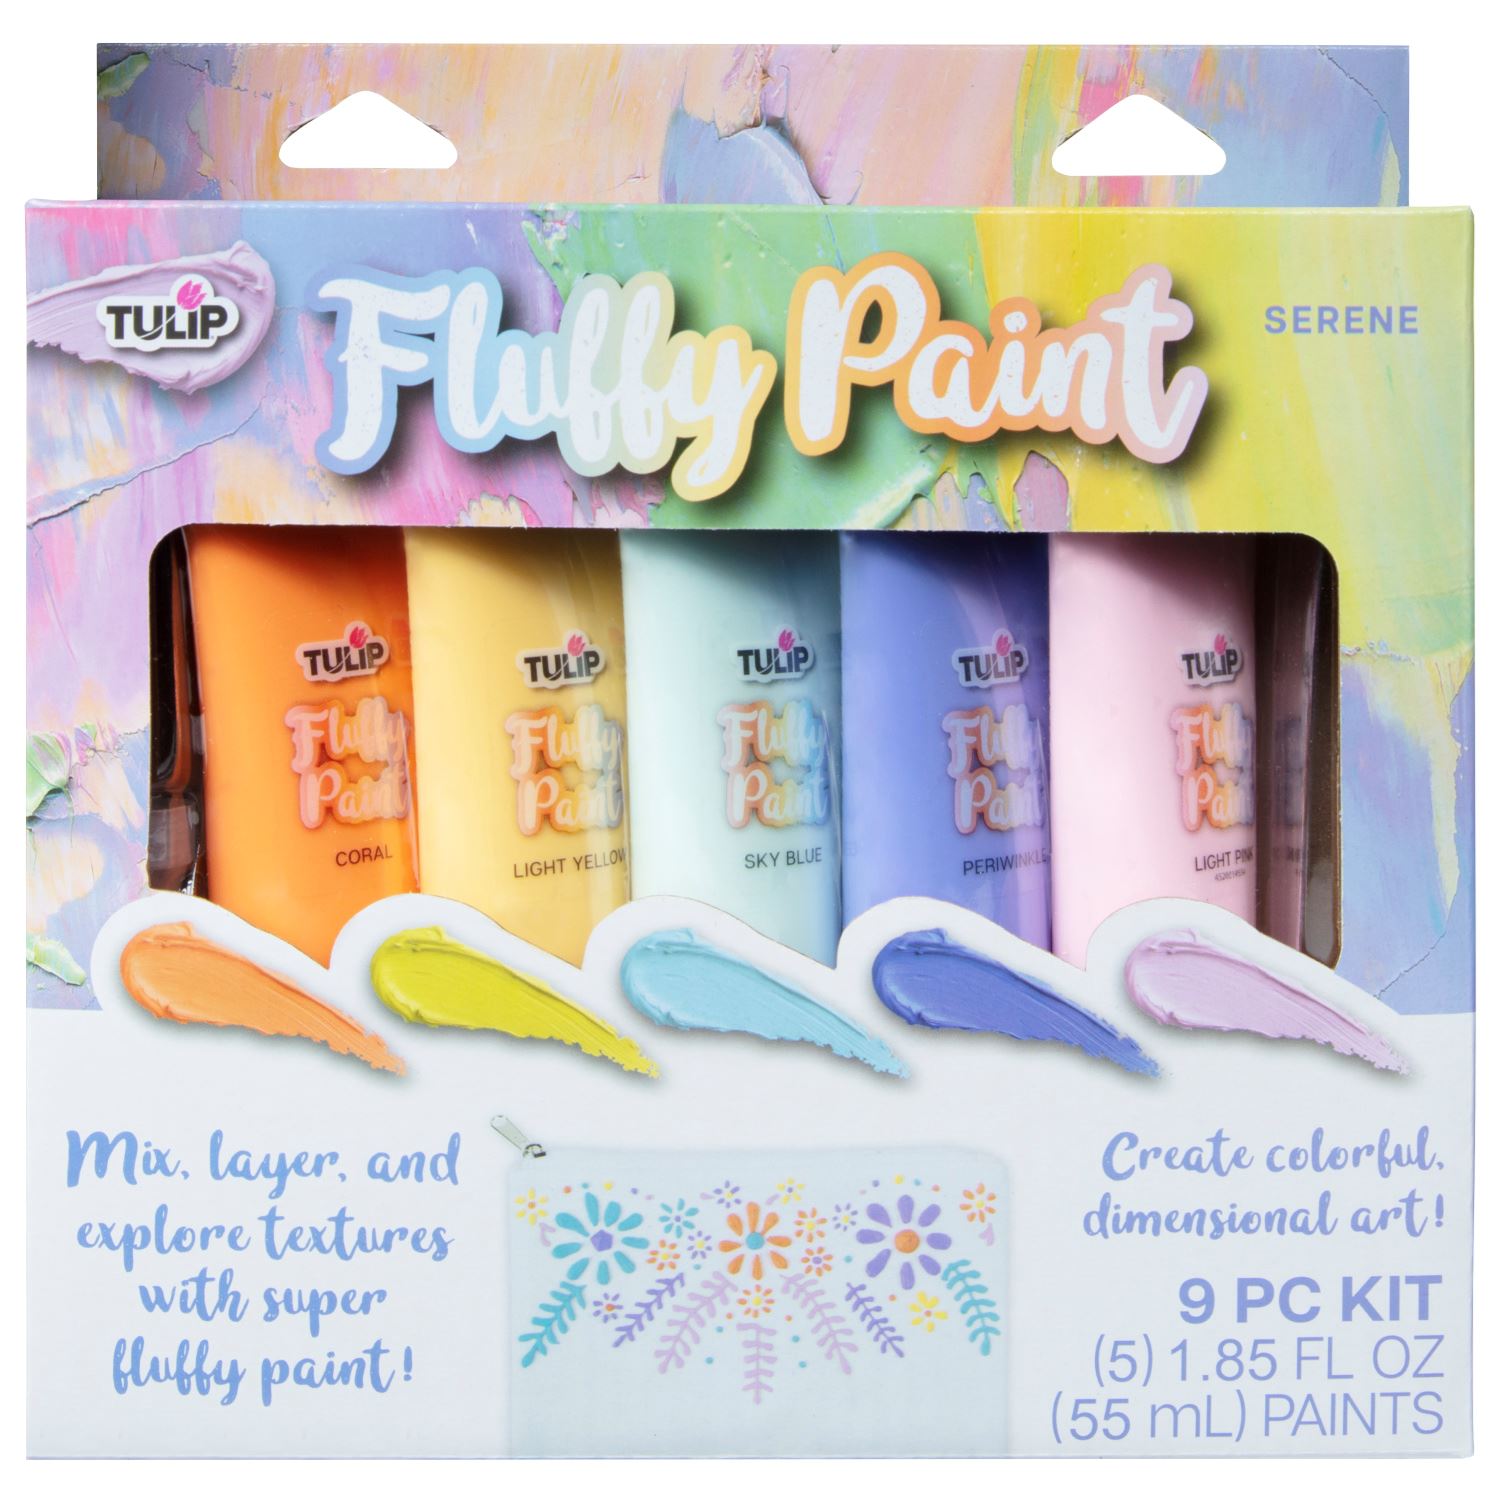 Colorations Kids 4 oz Paint Set - 23 Colors: Rainbow, Glitter, Metallic, and Fluorescent Paints - Non-Toxic, Artistic Fun